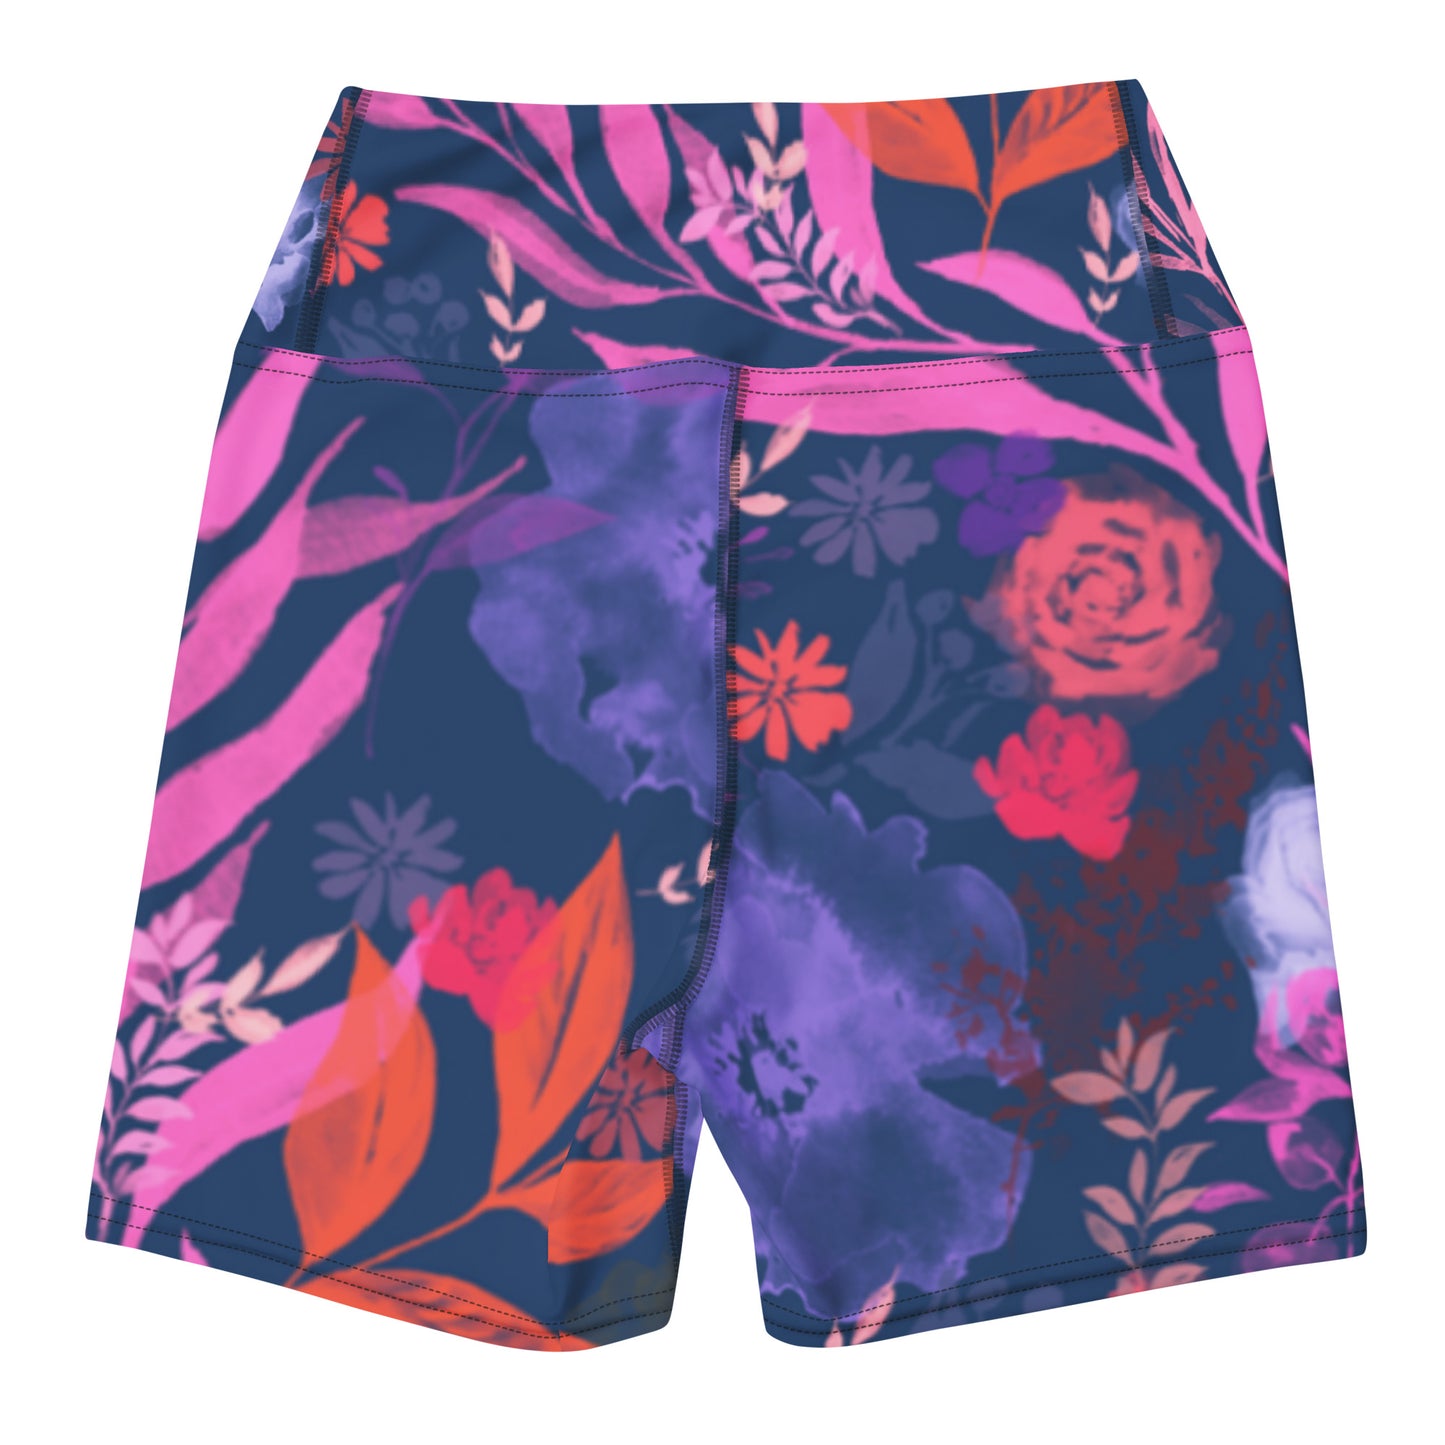 Multicolor Flowers Blue Yoga Shorts. Design hand-painted by the Designer Maria Alejandra Echenique